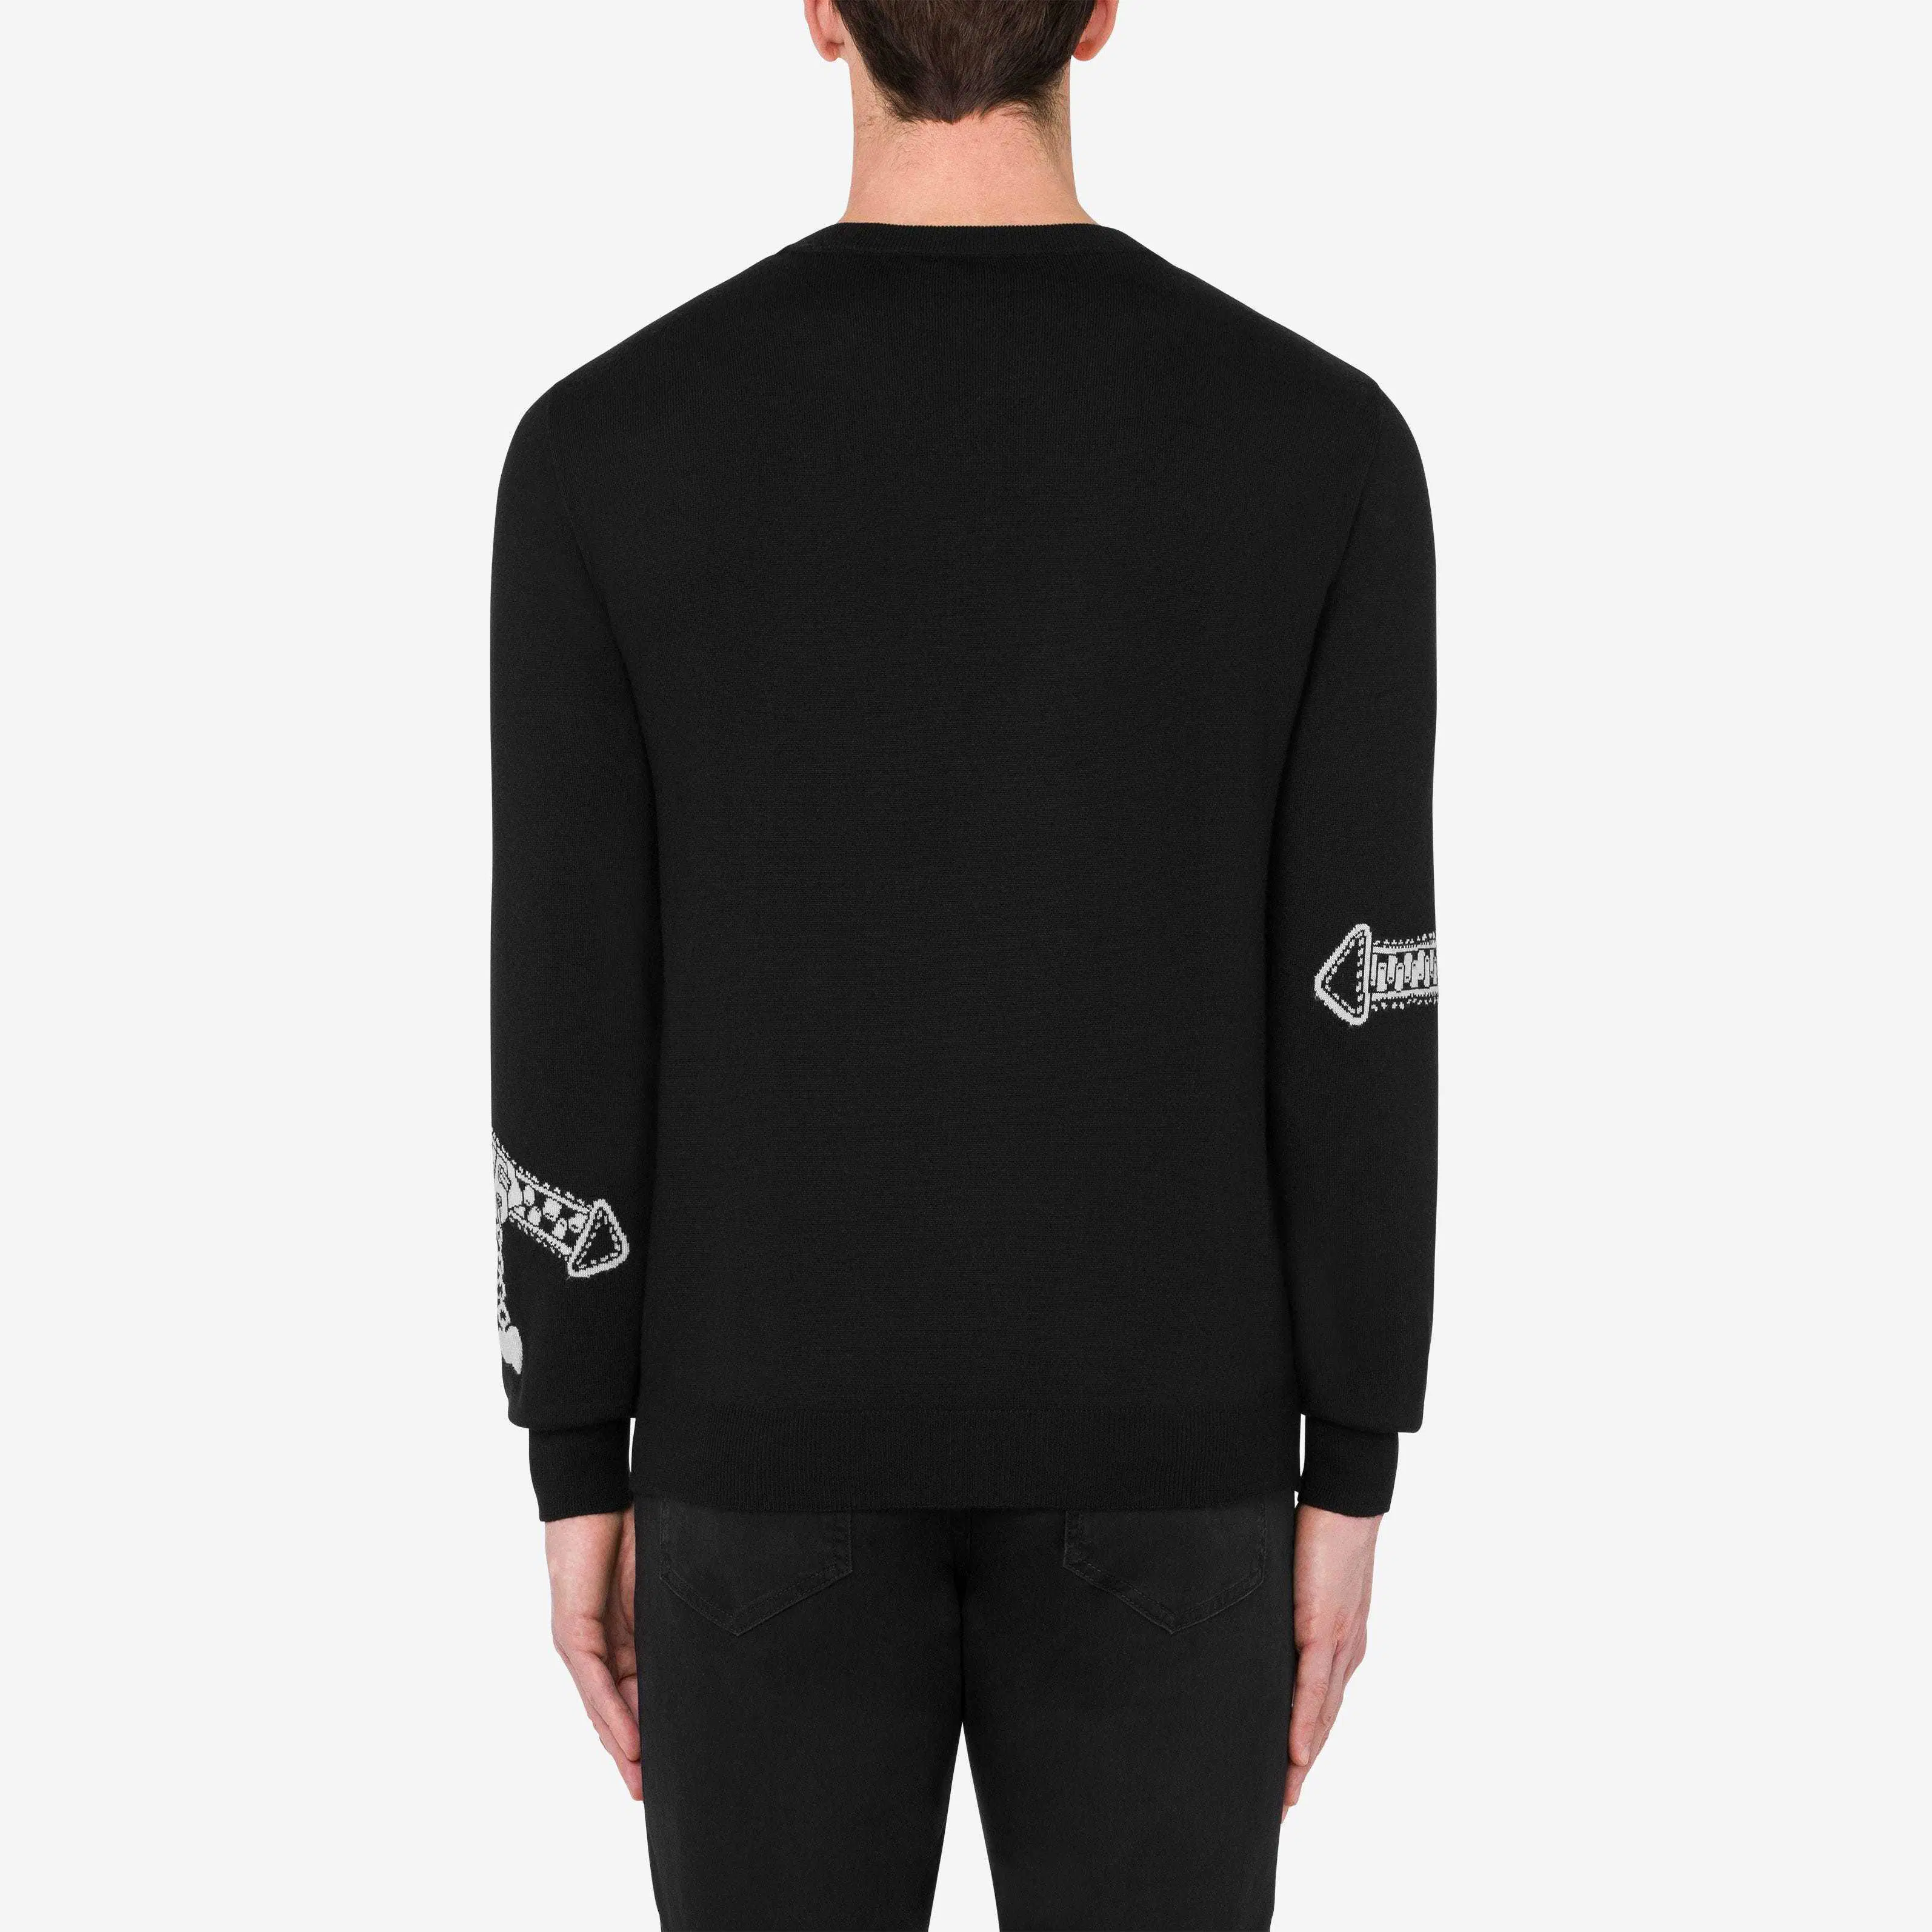 New Design Men impresión Digital Jersey de algodón ropa de punto moda Casual Suéter de lana gruesa para